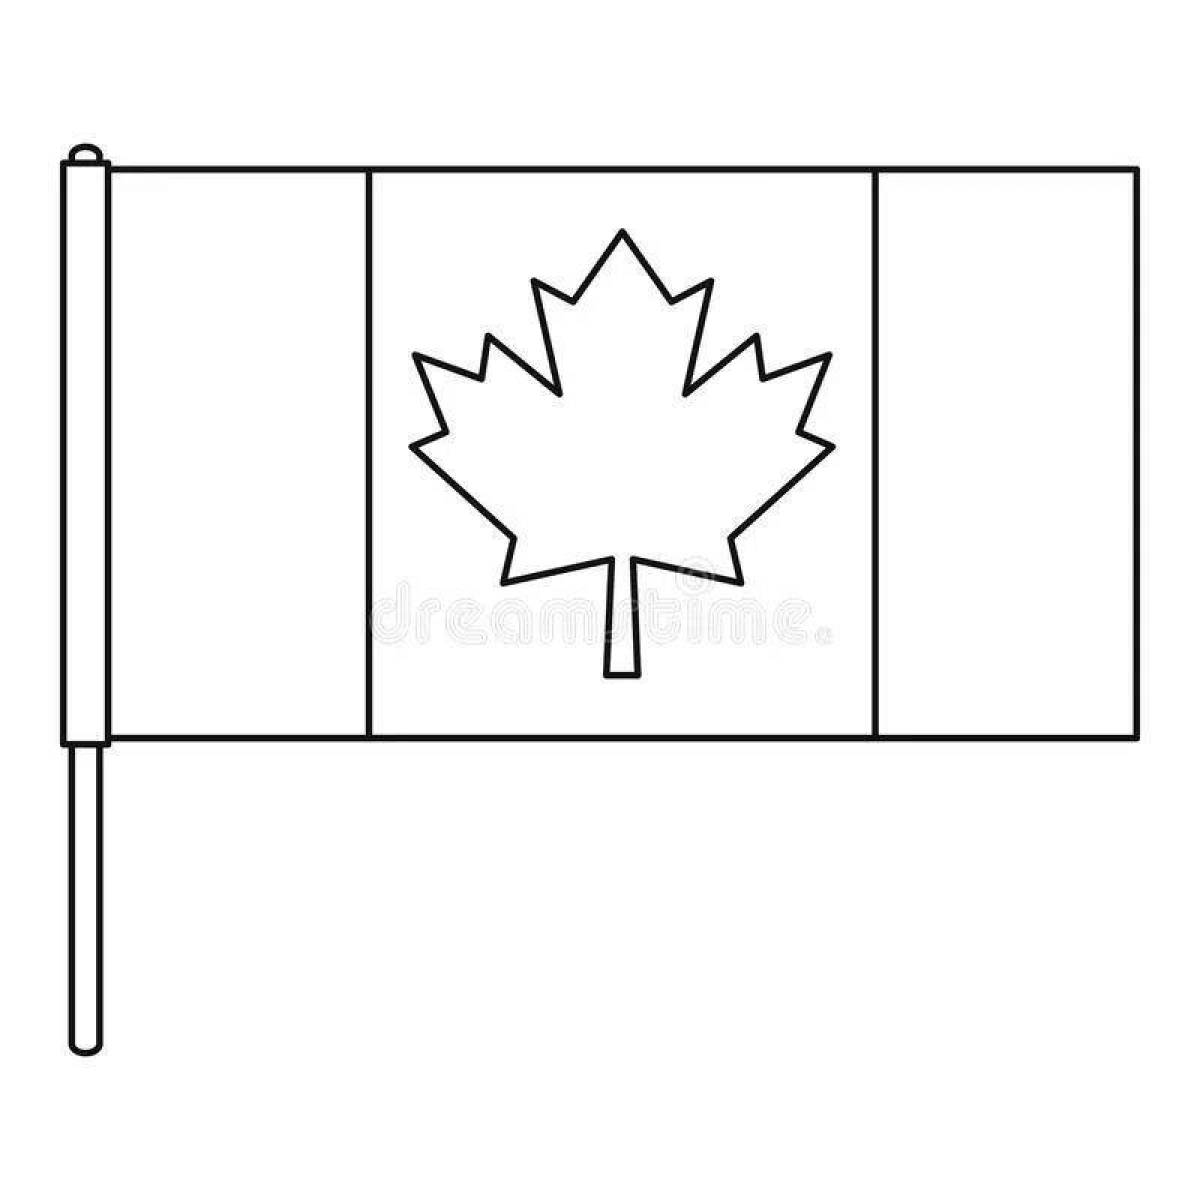 Великолепная страница раскраски канадского флага